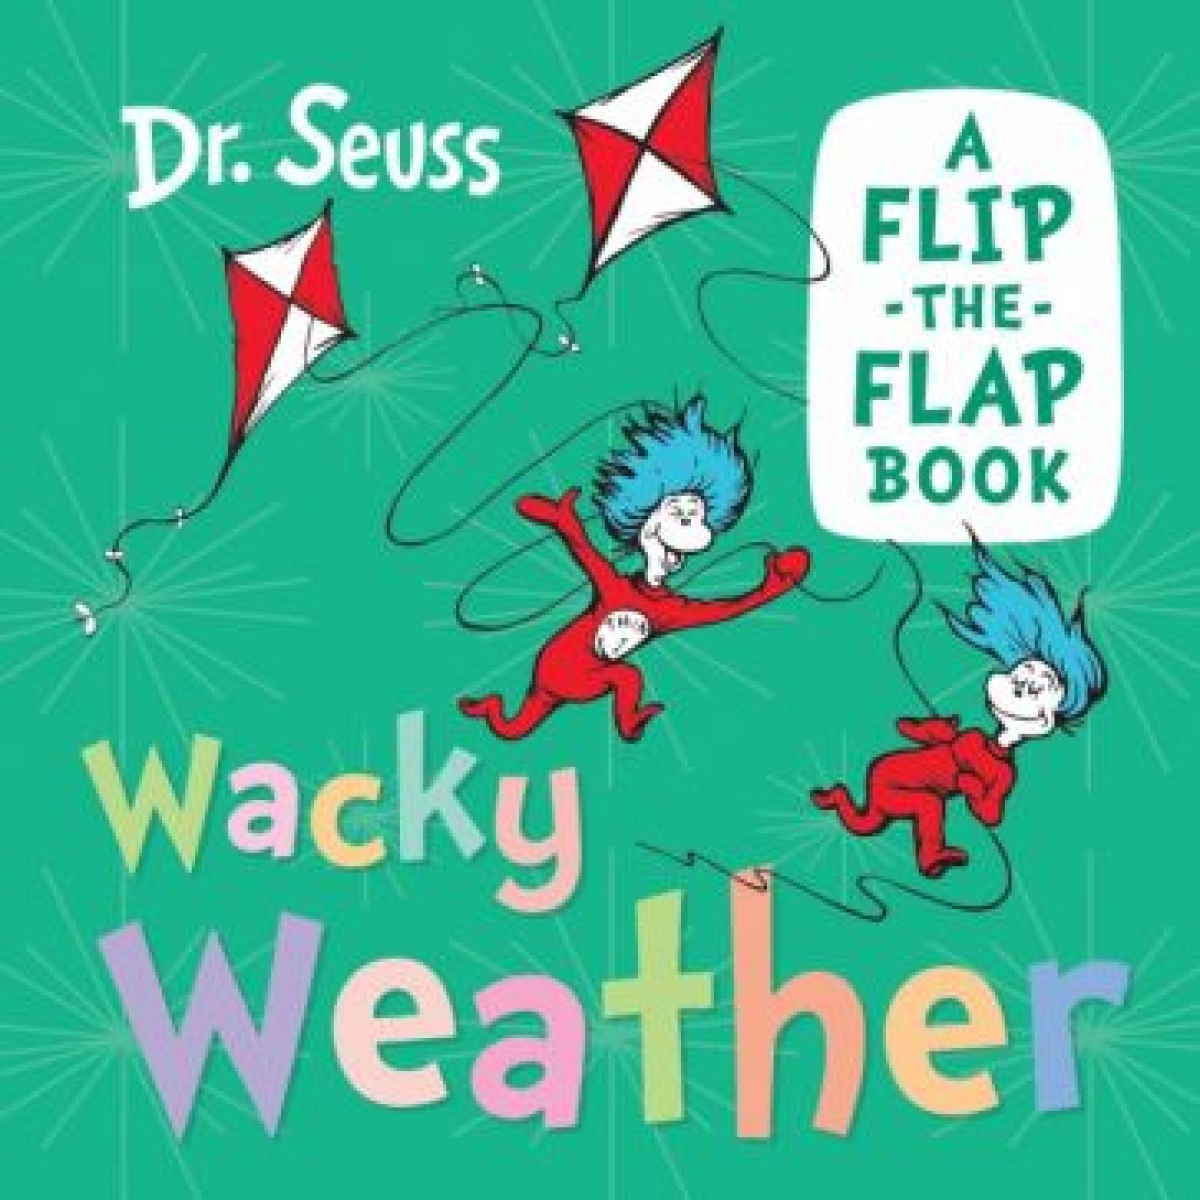 Dr Seuss Wacky Weather. A flip-the-flap book 